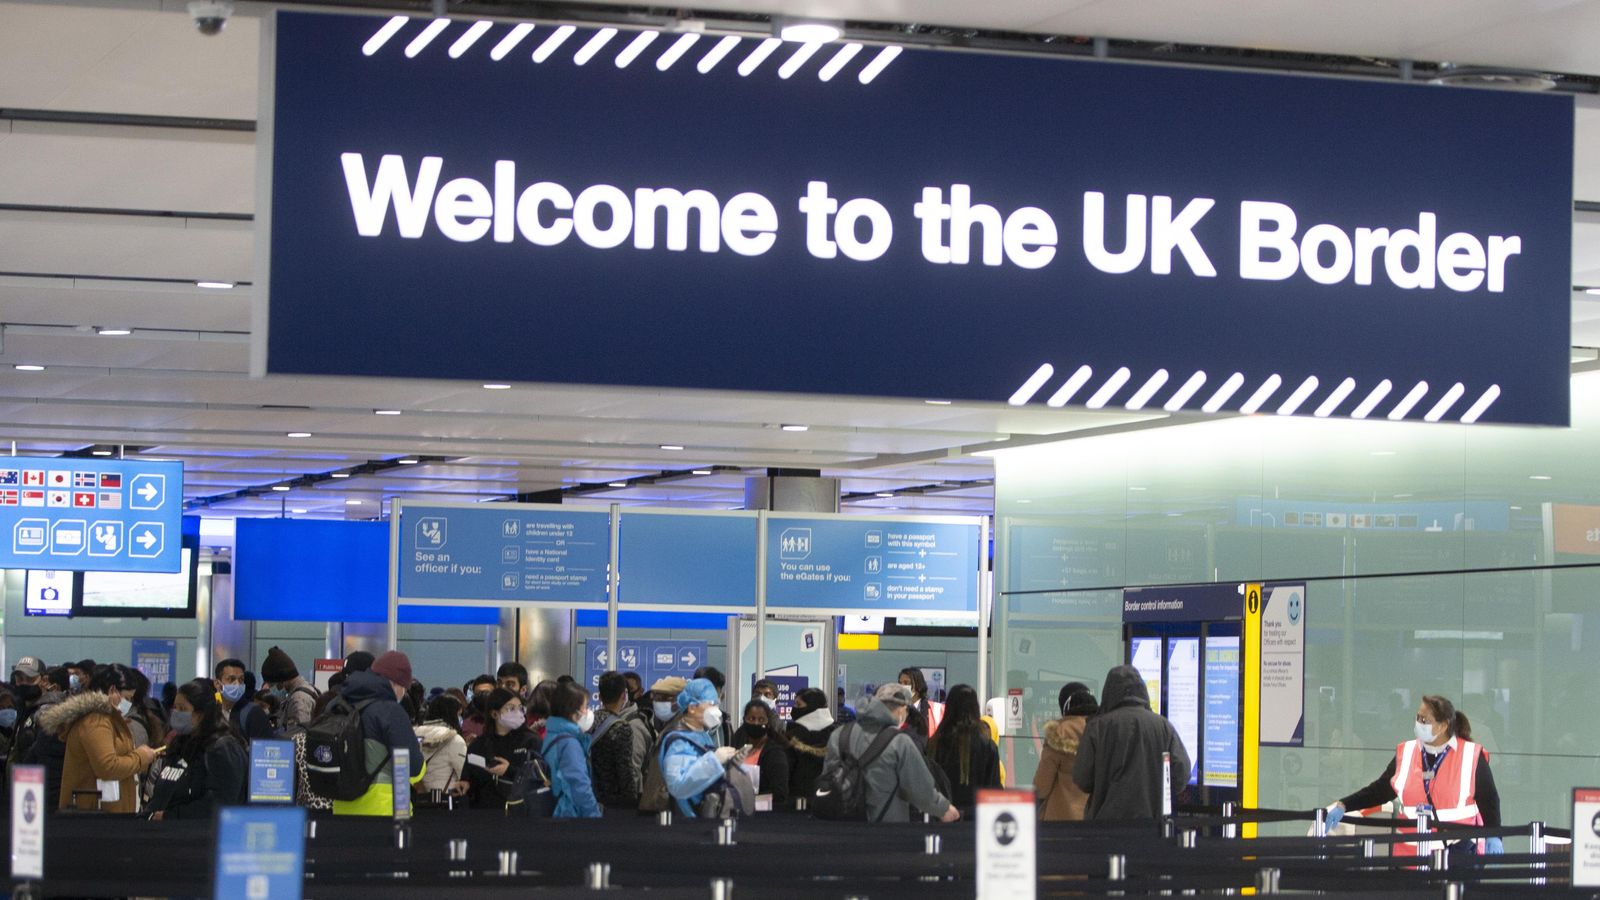 Uranium detected in package at Heathrow Airport - counter-terror police investigate